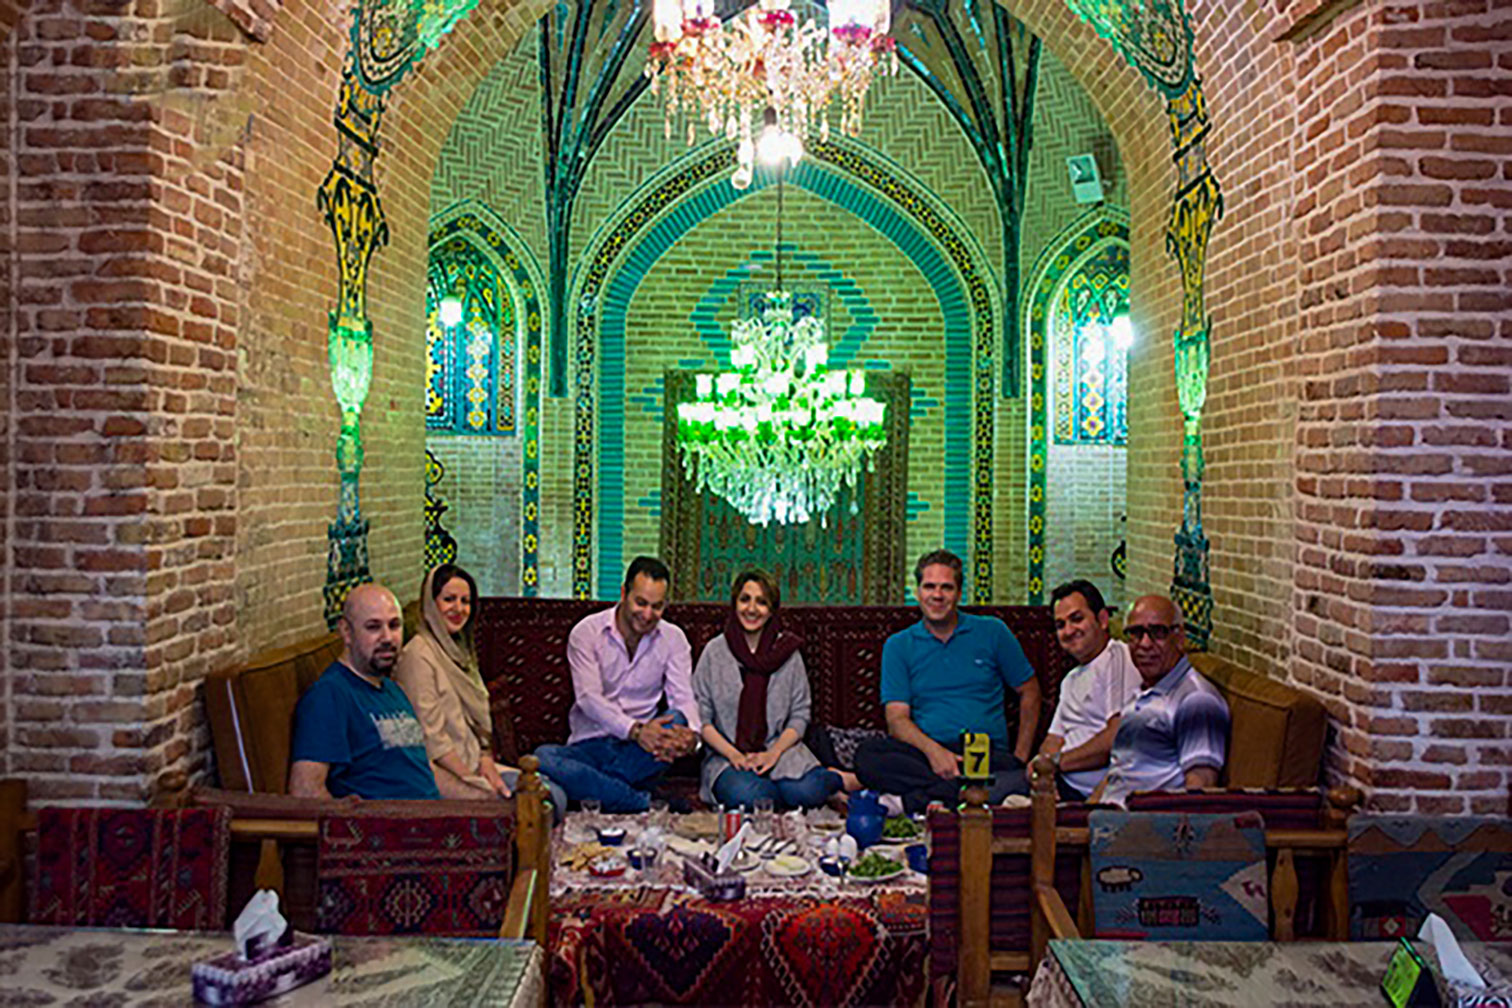 khayyam restaurant tehran - The history of bazaars in Iran